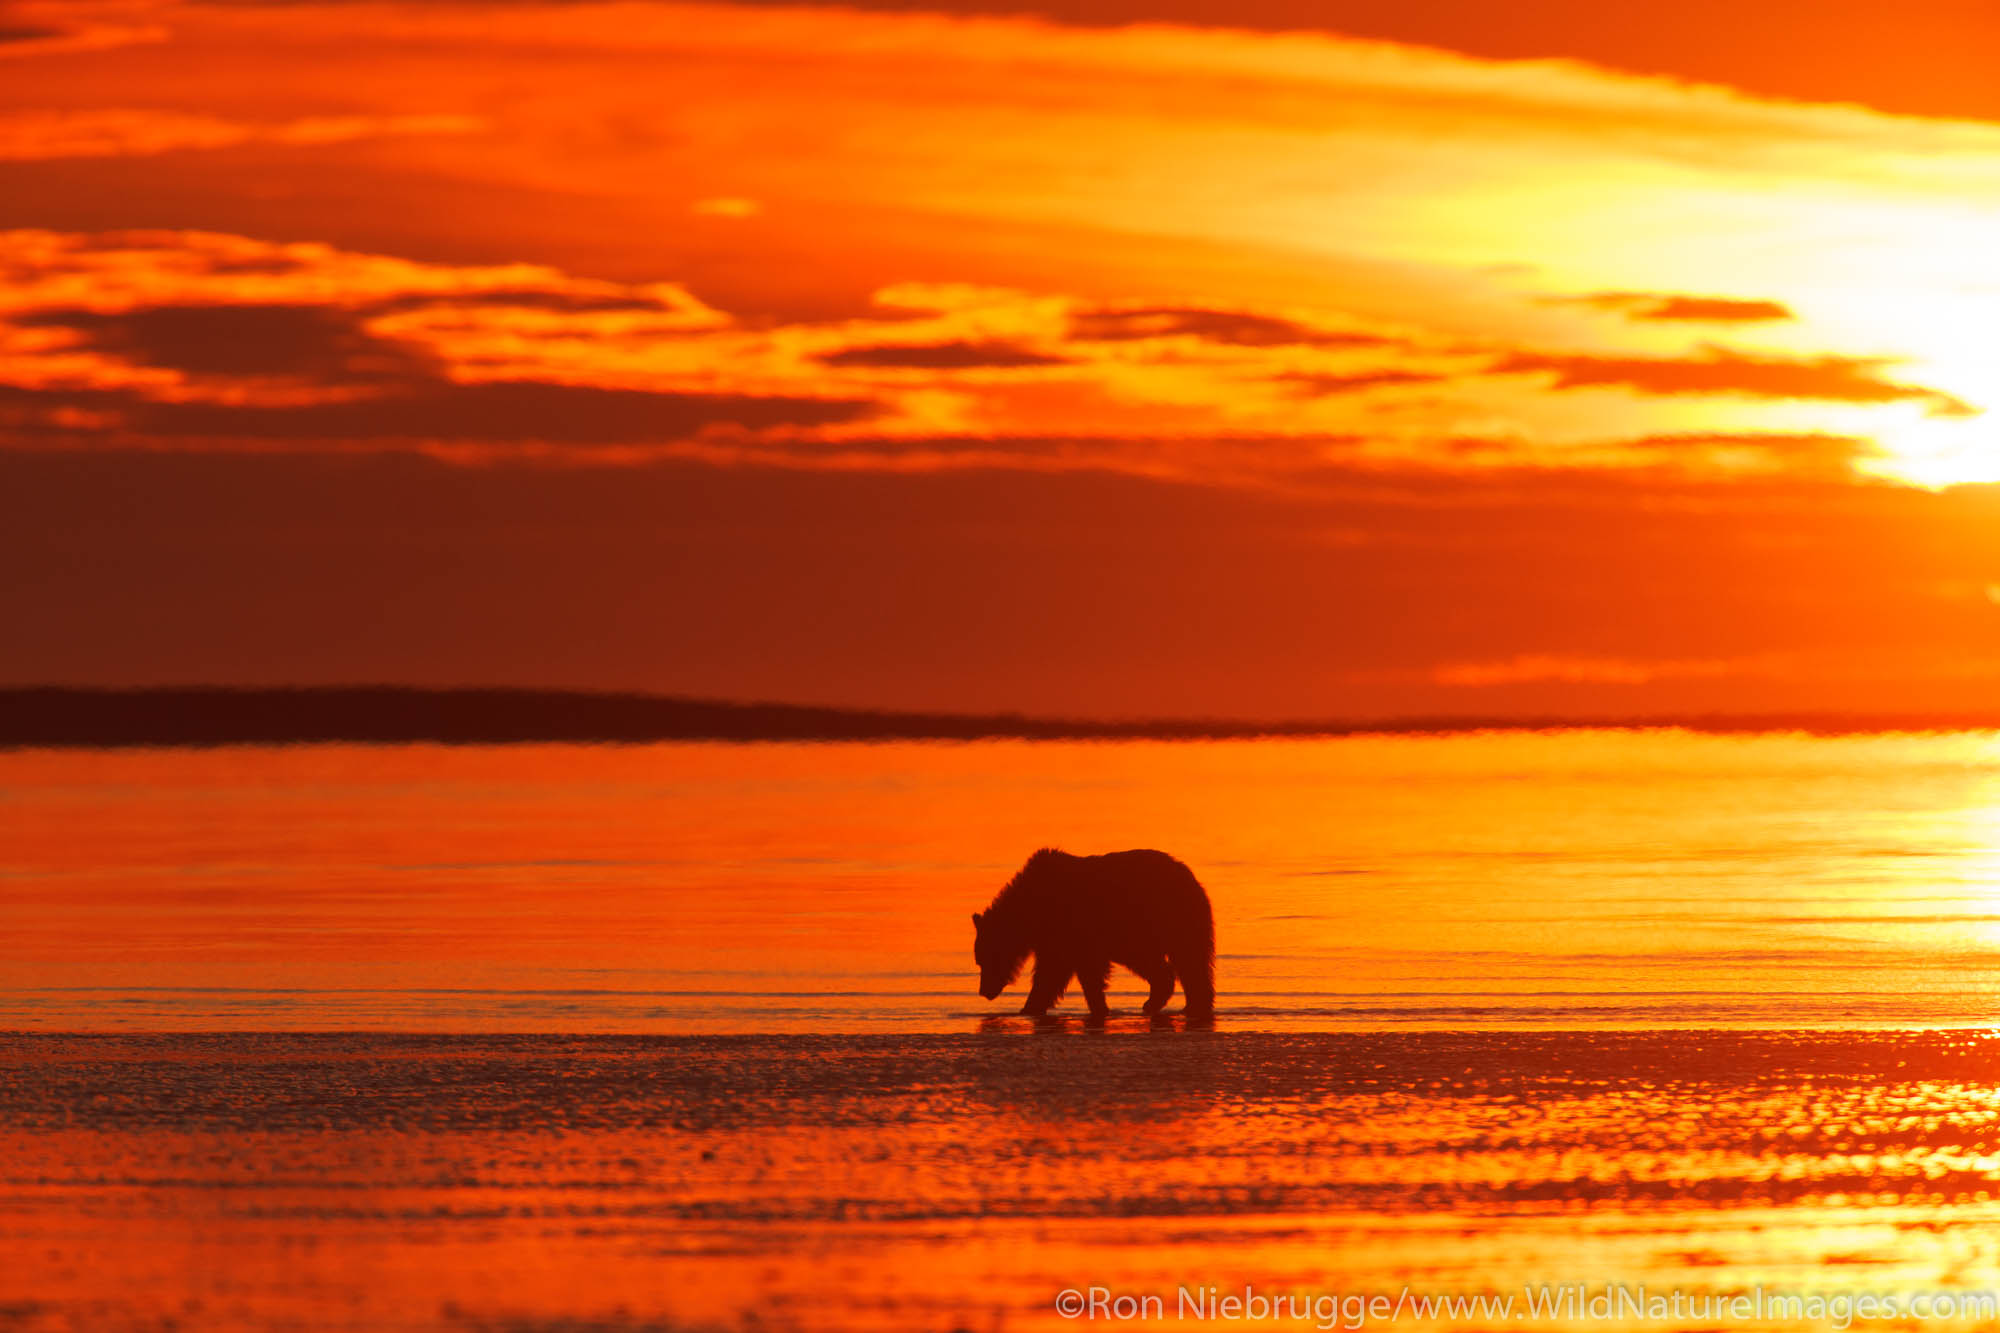 Brown or Grizzly Bear silhouetted against sunrise sky, Lake Clark National Park, Alaska.